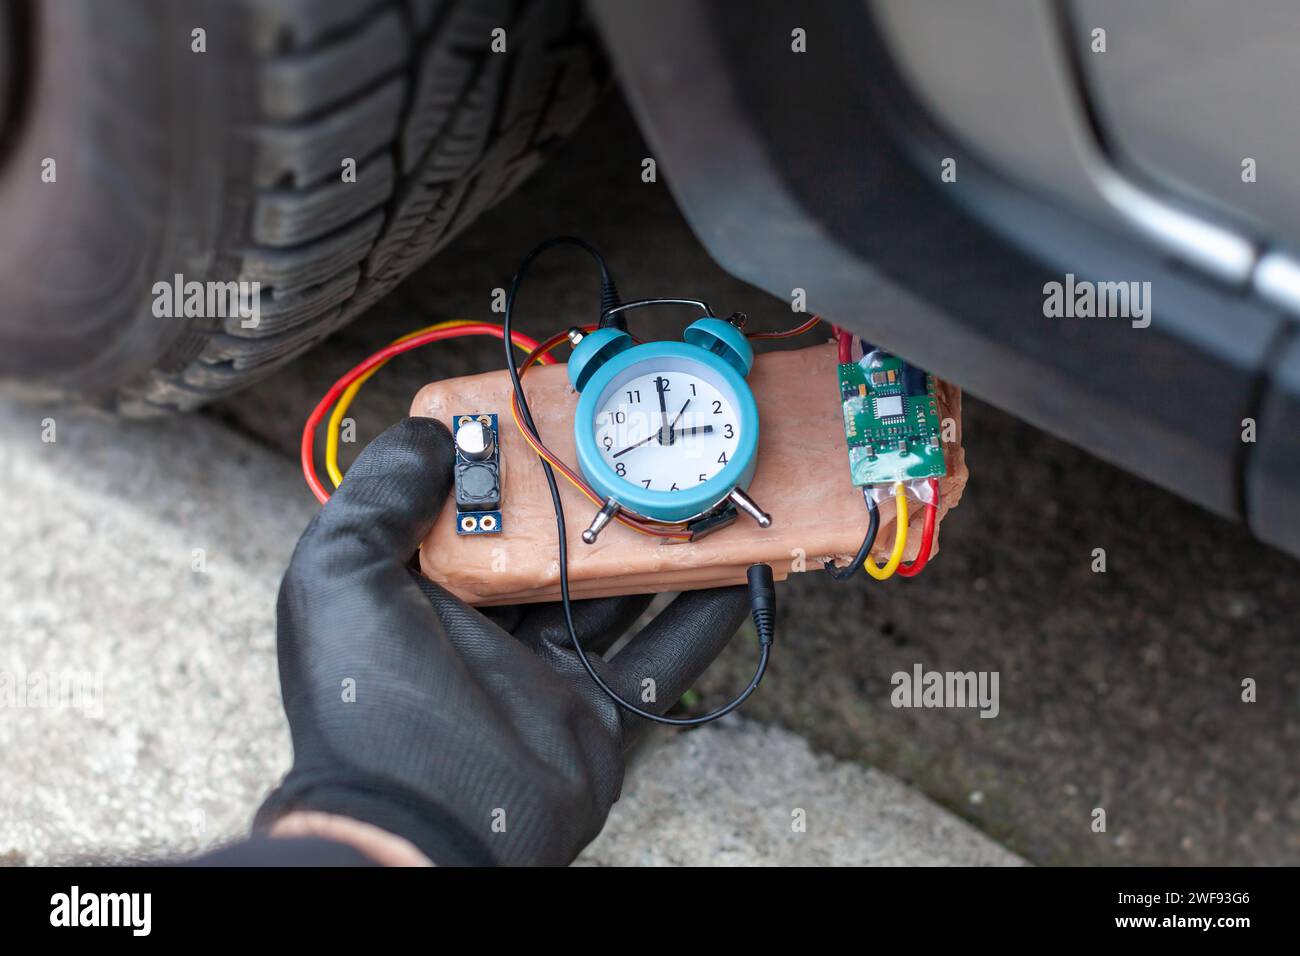 terrorist placing a time bomb under vehicle Stock Photo